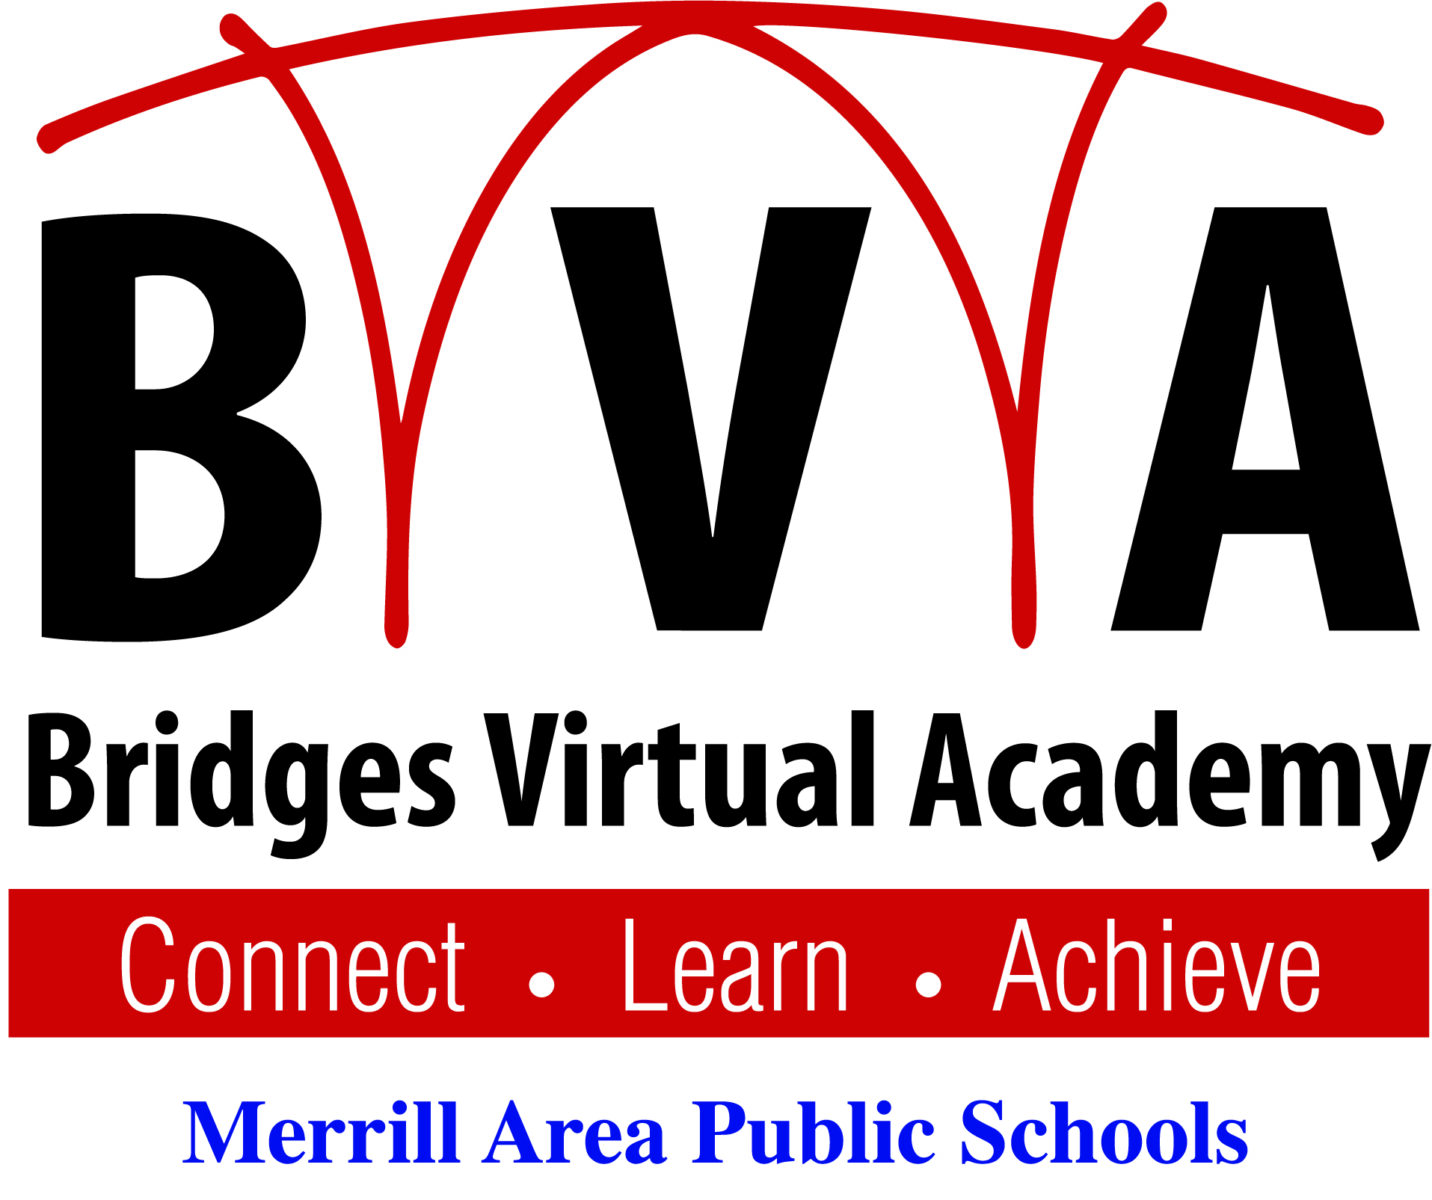 Bridges Virtual Academy featured at Harvard Kennedy School and internationally